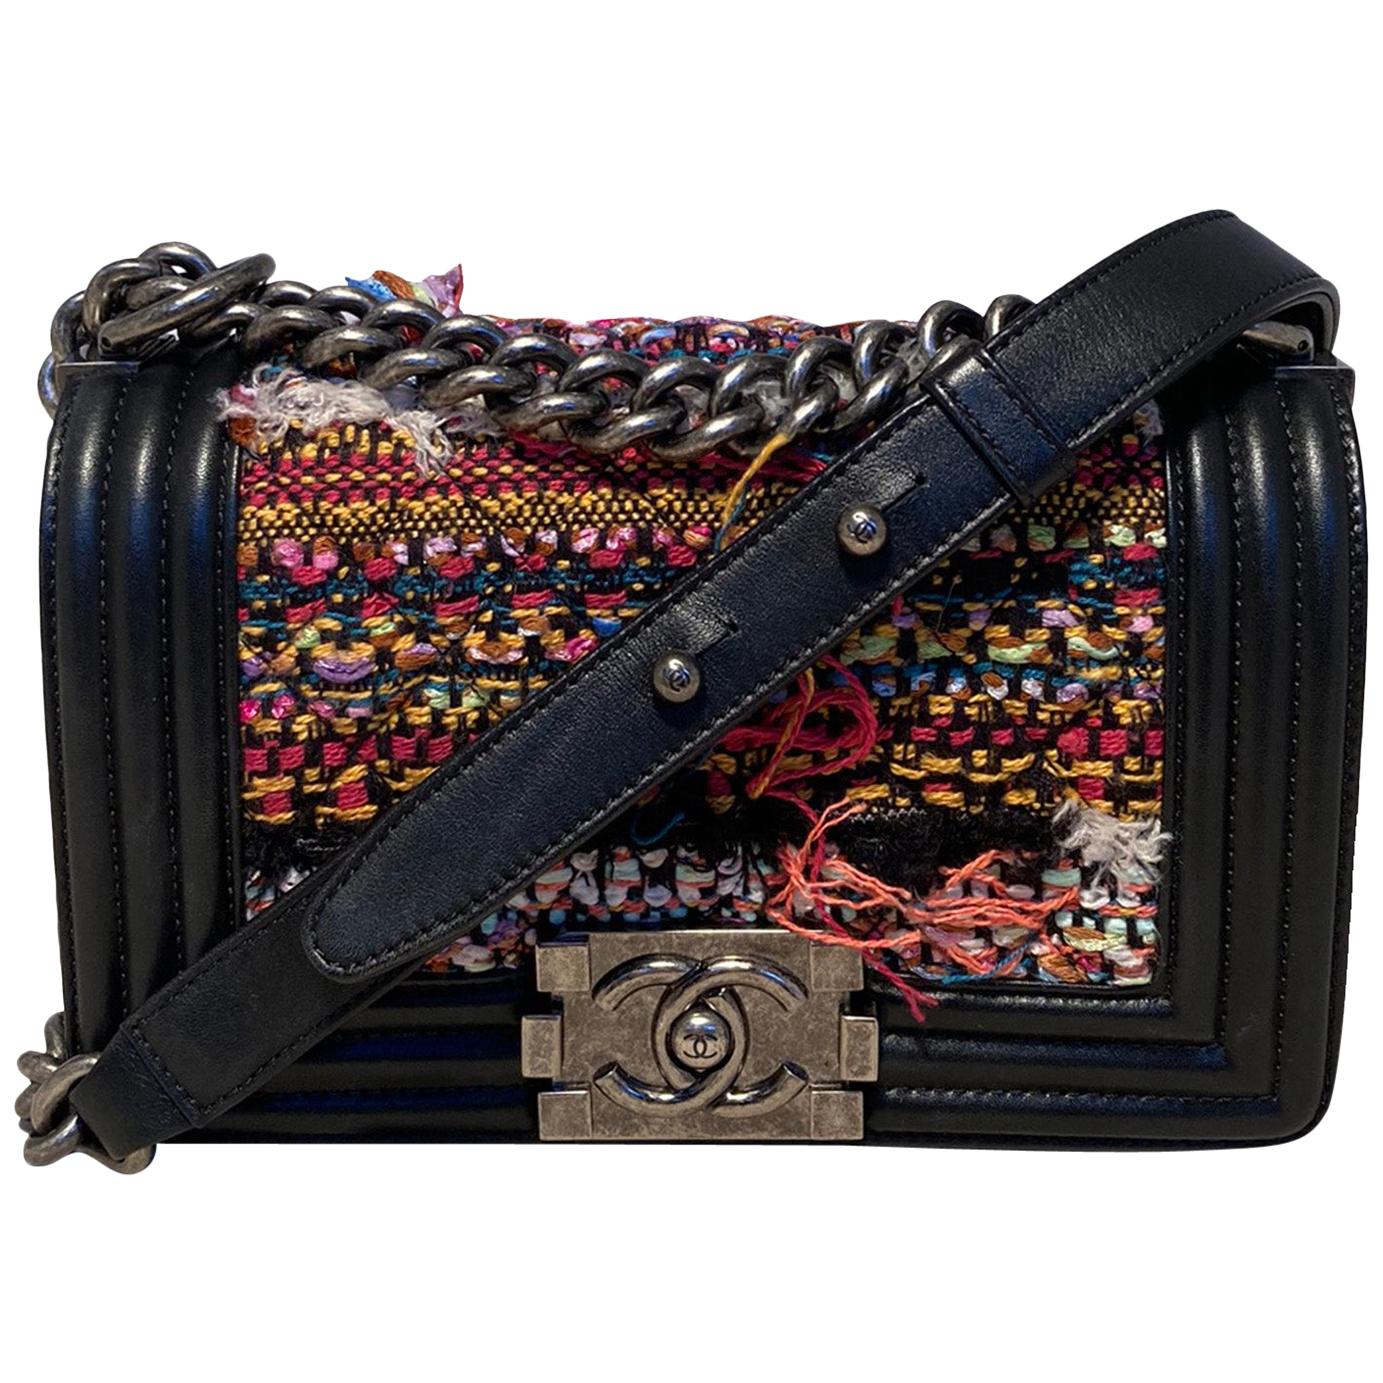 Chanel Dubai crossbody/messenger bag